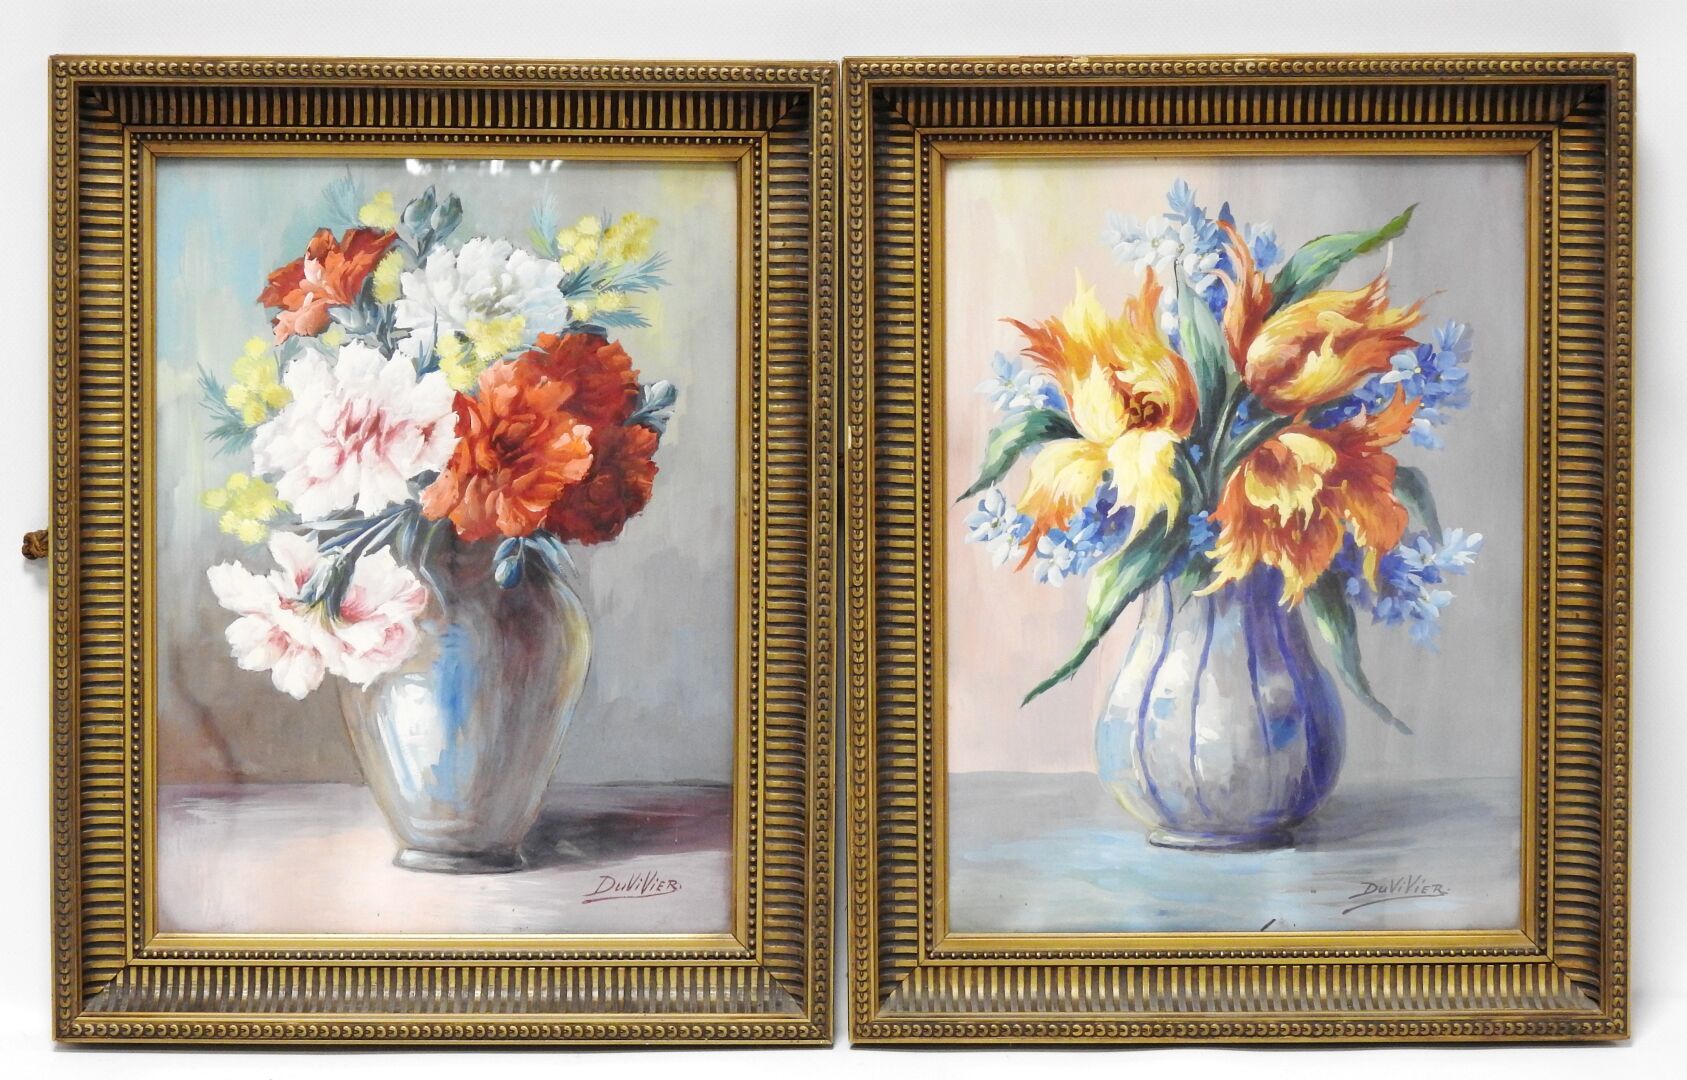 Null DUVIVIER - 20世纪
一对带花瓶的静物画
水粉画
右下方有签名
38 x 28.5 cm at sight